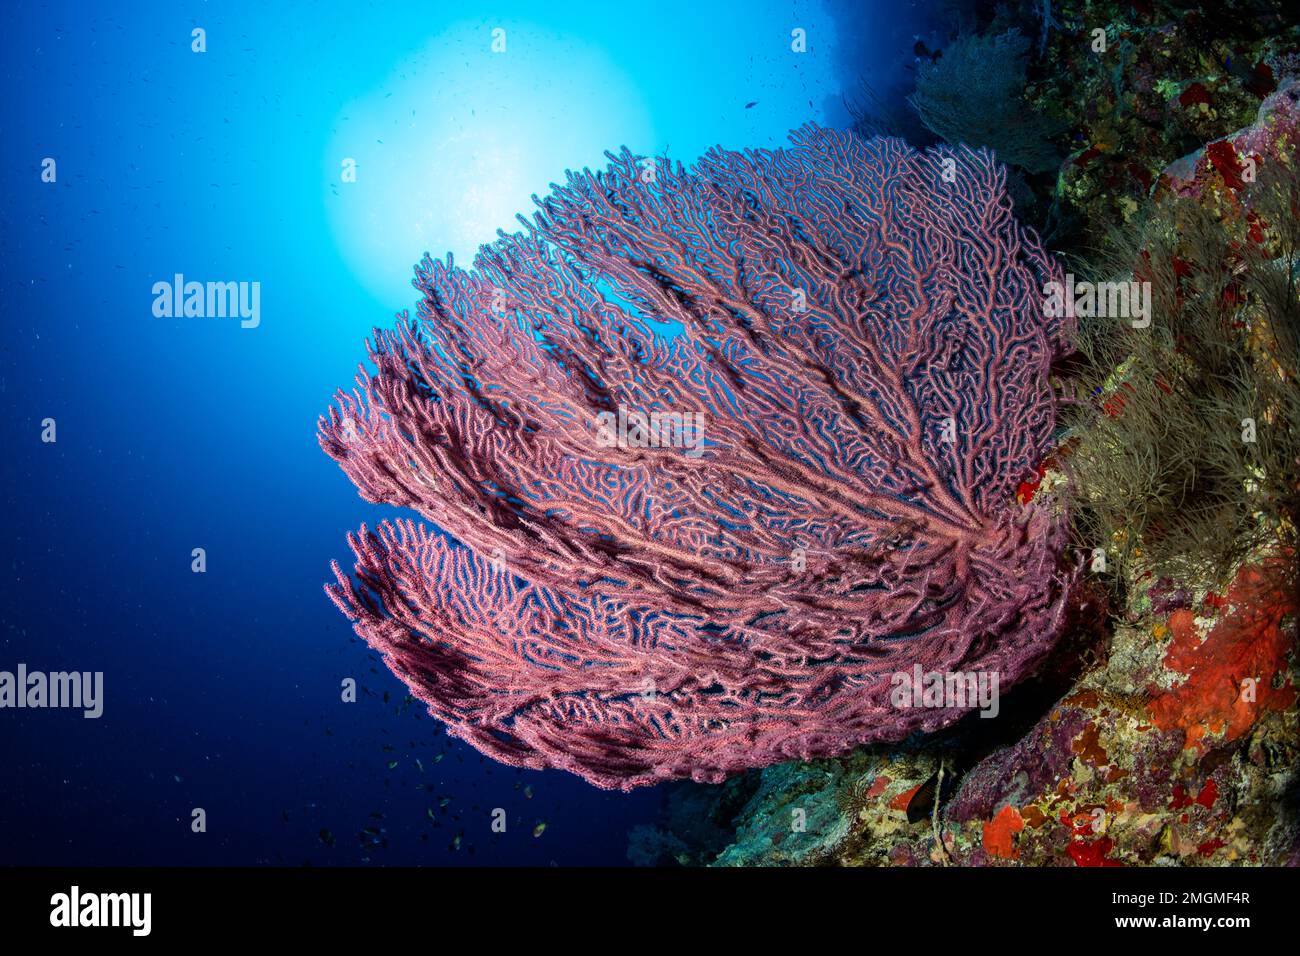 Red sea fan, (Echinogorgia sp.) on a wall, Ras Mohammed, Sinai Peninsula, Red Sea, Egypt Stock Photo